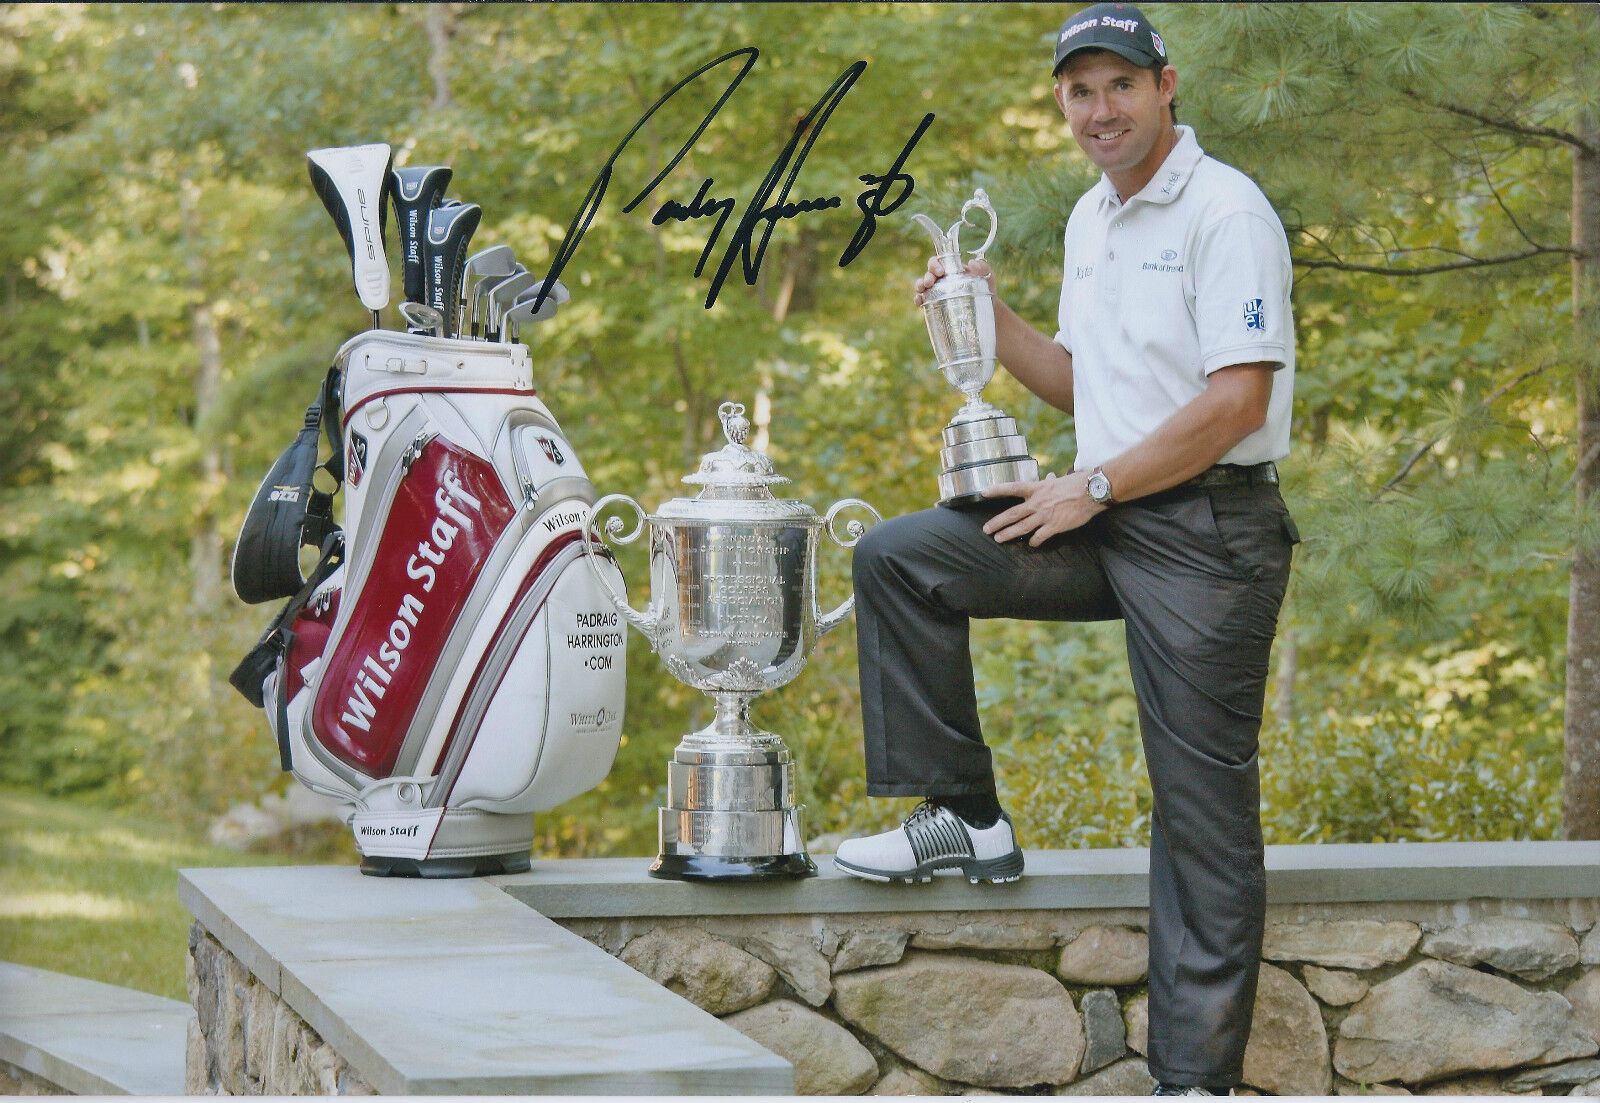 PADRAIG HARRINGTON SIGNED Autograph 12x8 Photo Poster painting AFTAL COA 2008 Multiple Golf WIns